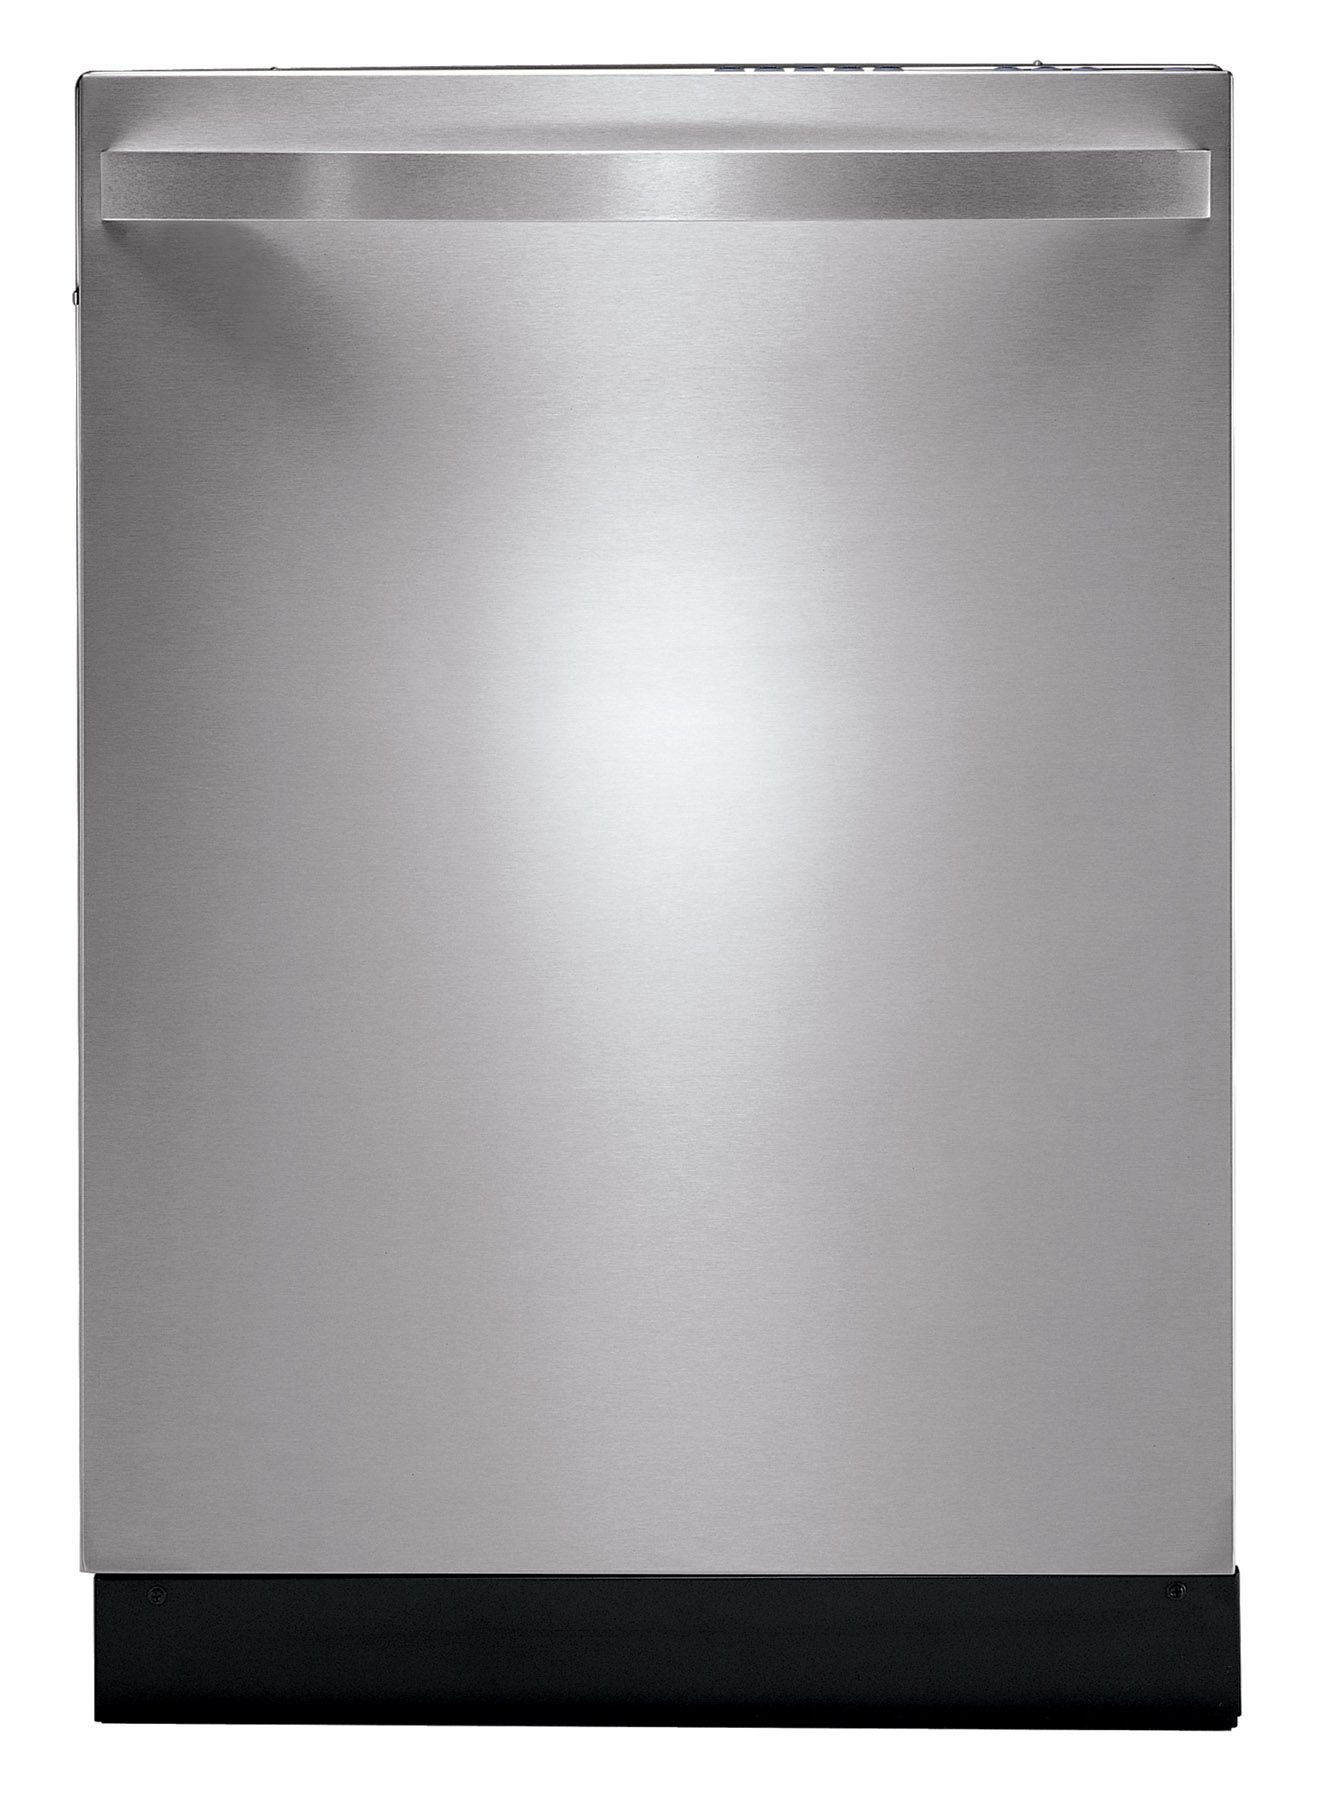   Icon Stainless Steel 24 24 inch Built in Dishwasher EDW7505HSS